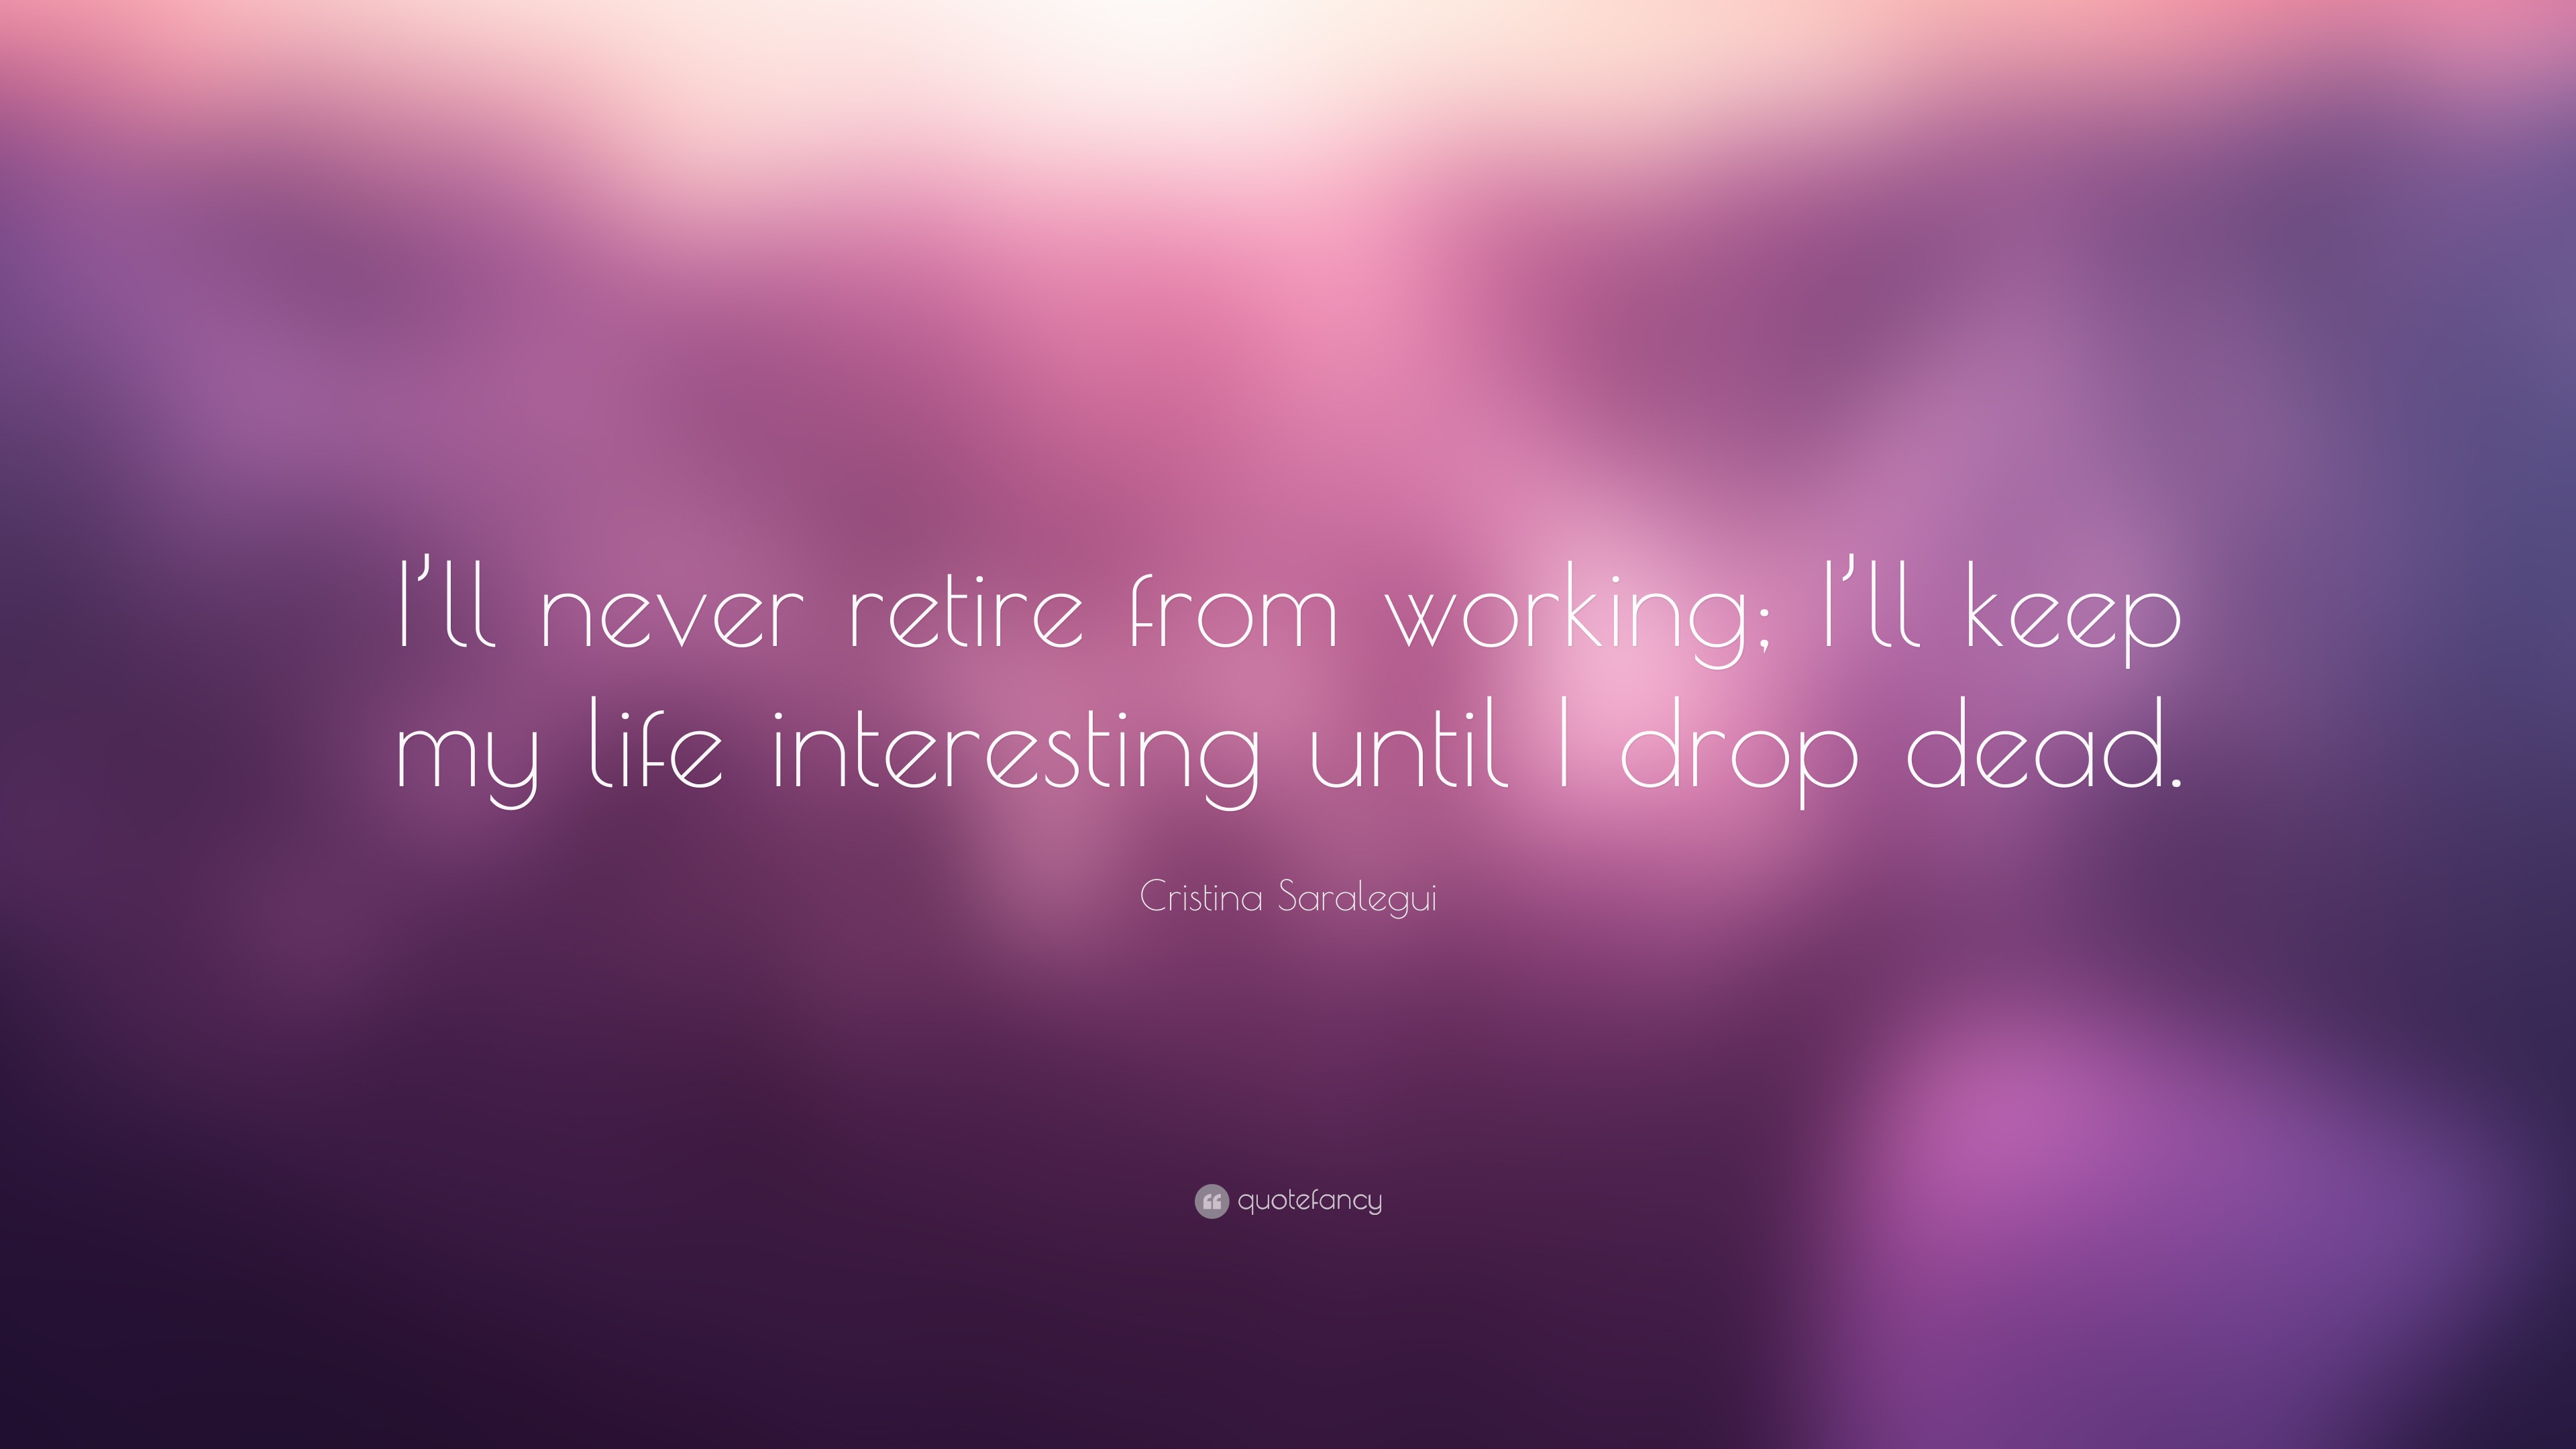 Cristina Saralegui Quote: “I'll never retire from working; I'll